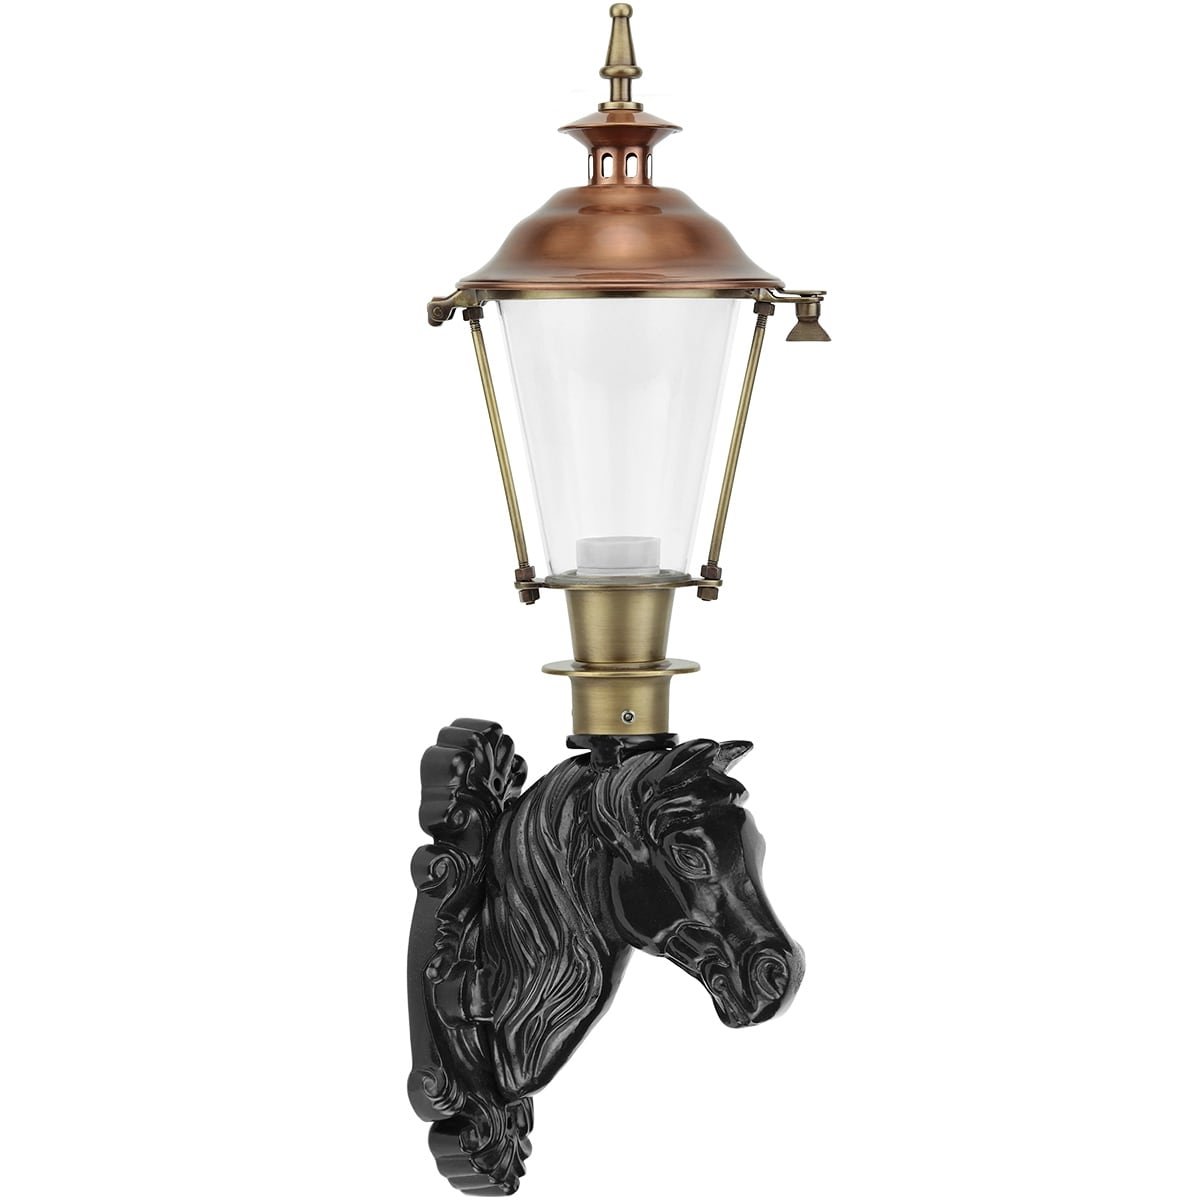 Horse lamp Kornhorn old copper - 72 cm